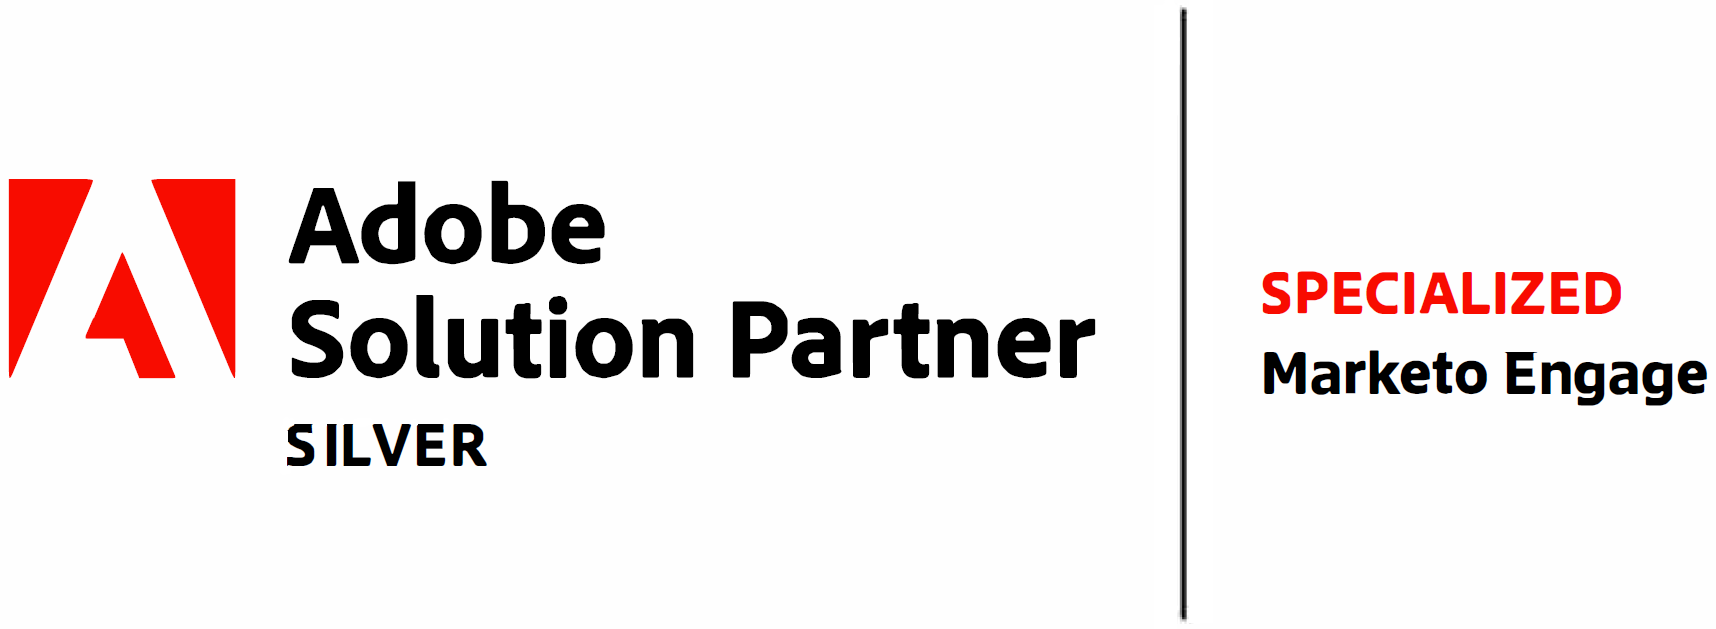 Adobe Silver Solution Partner logo for Marketo Engage